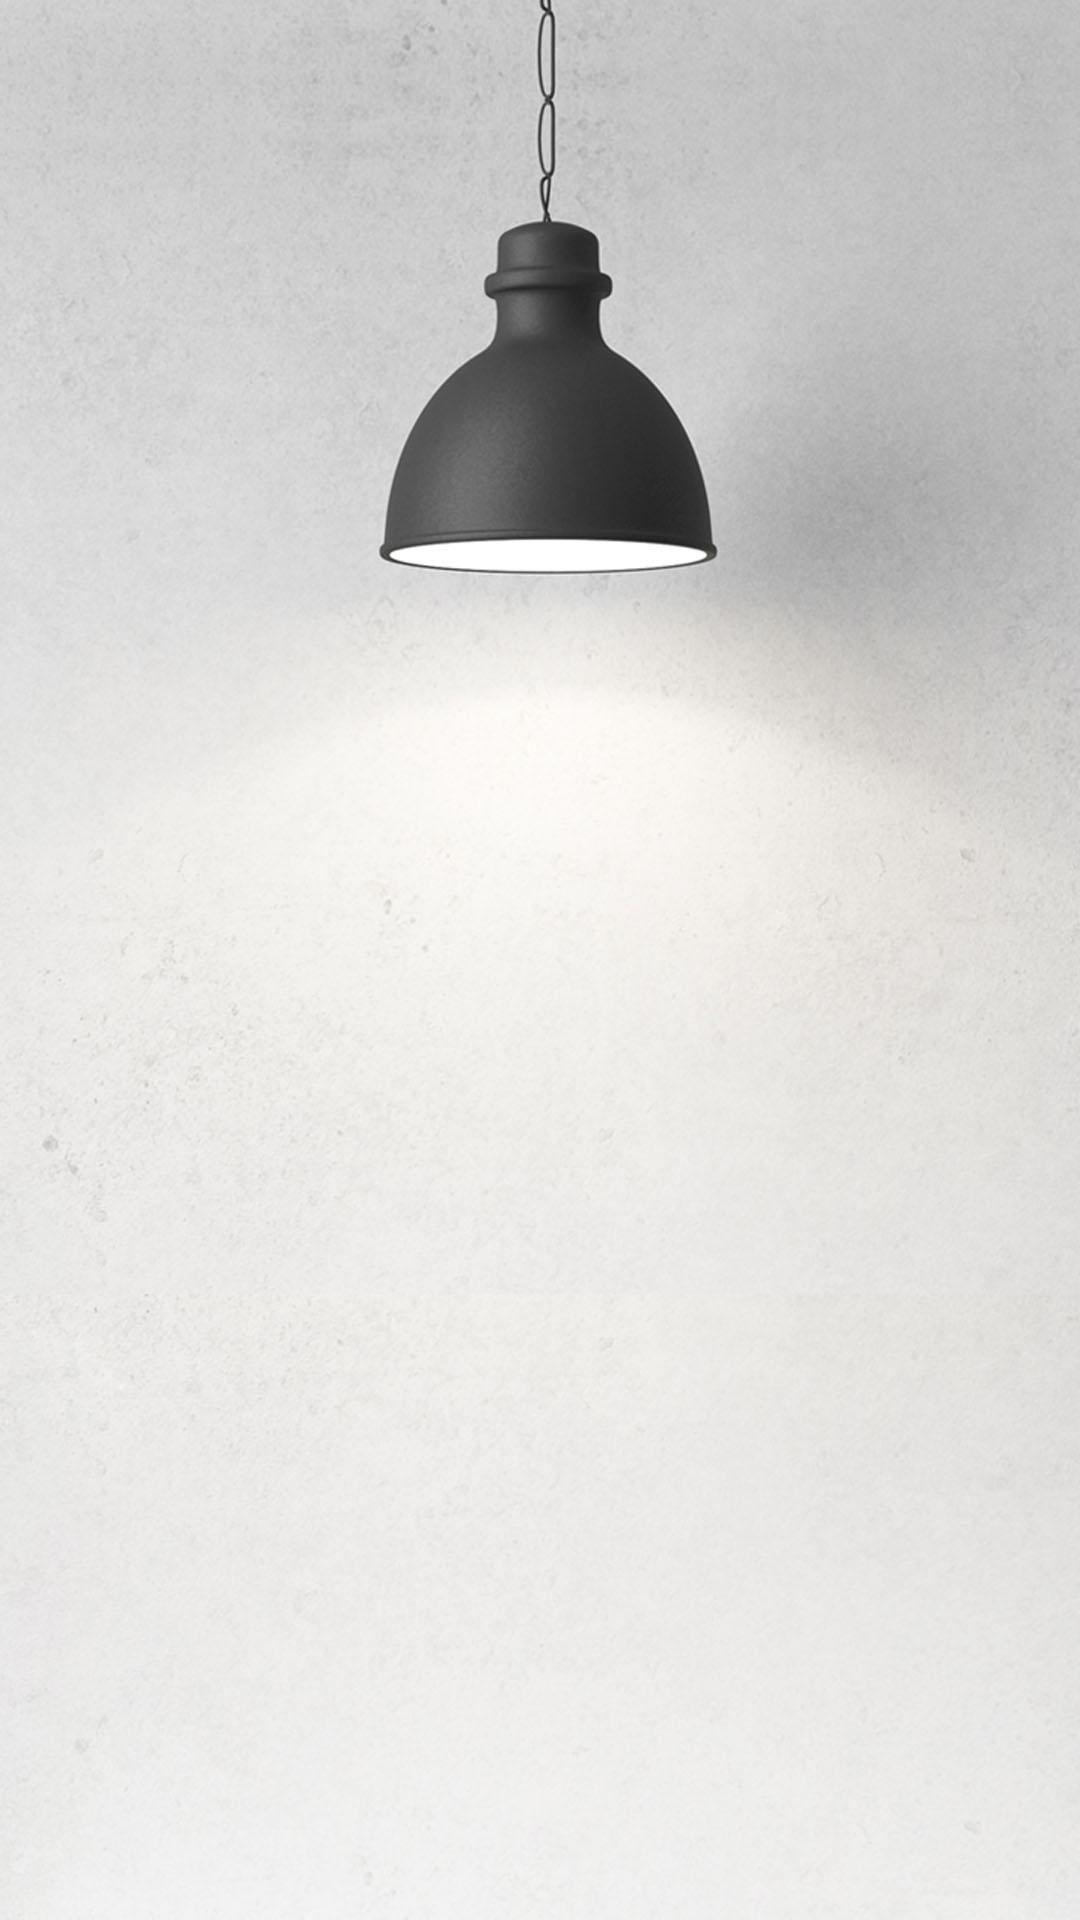 Minimal Lamp Light android wallpaper